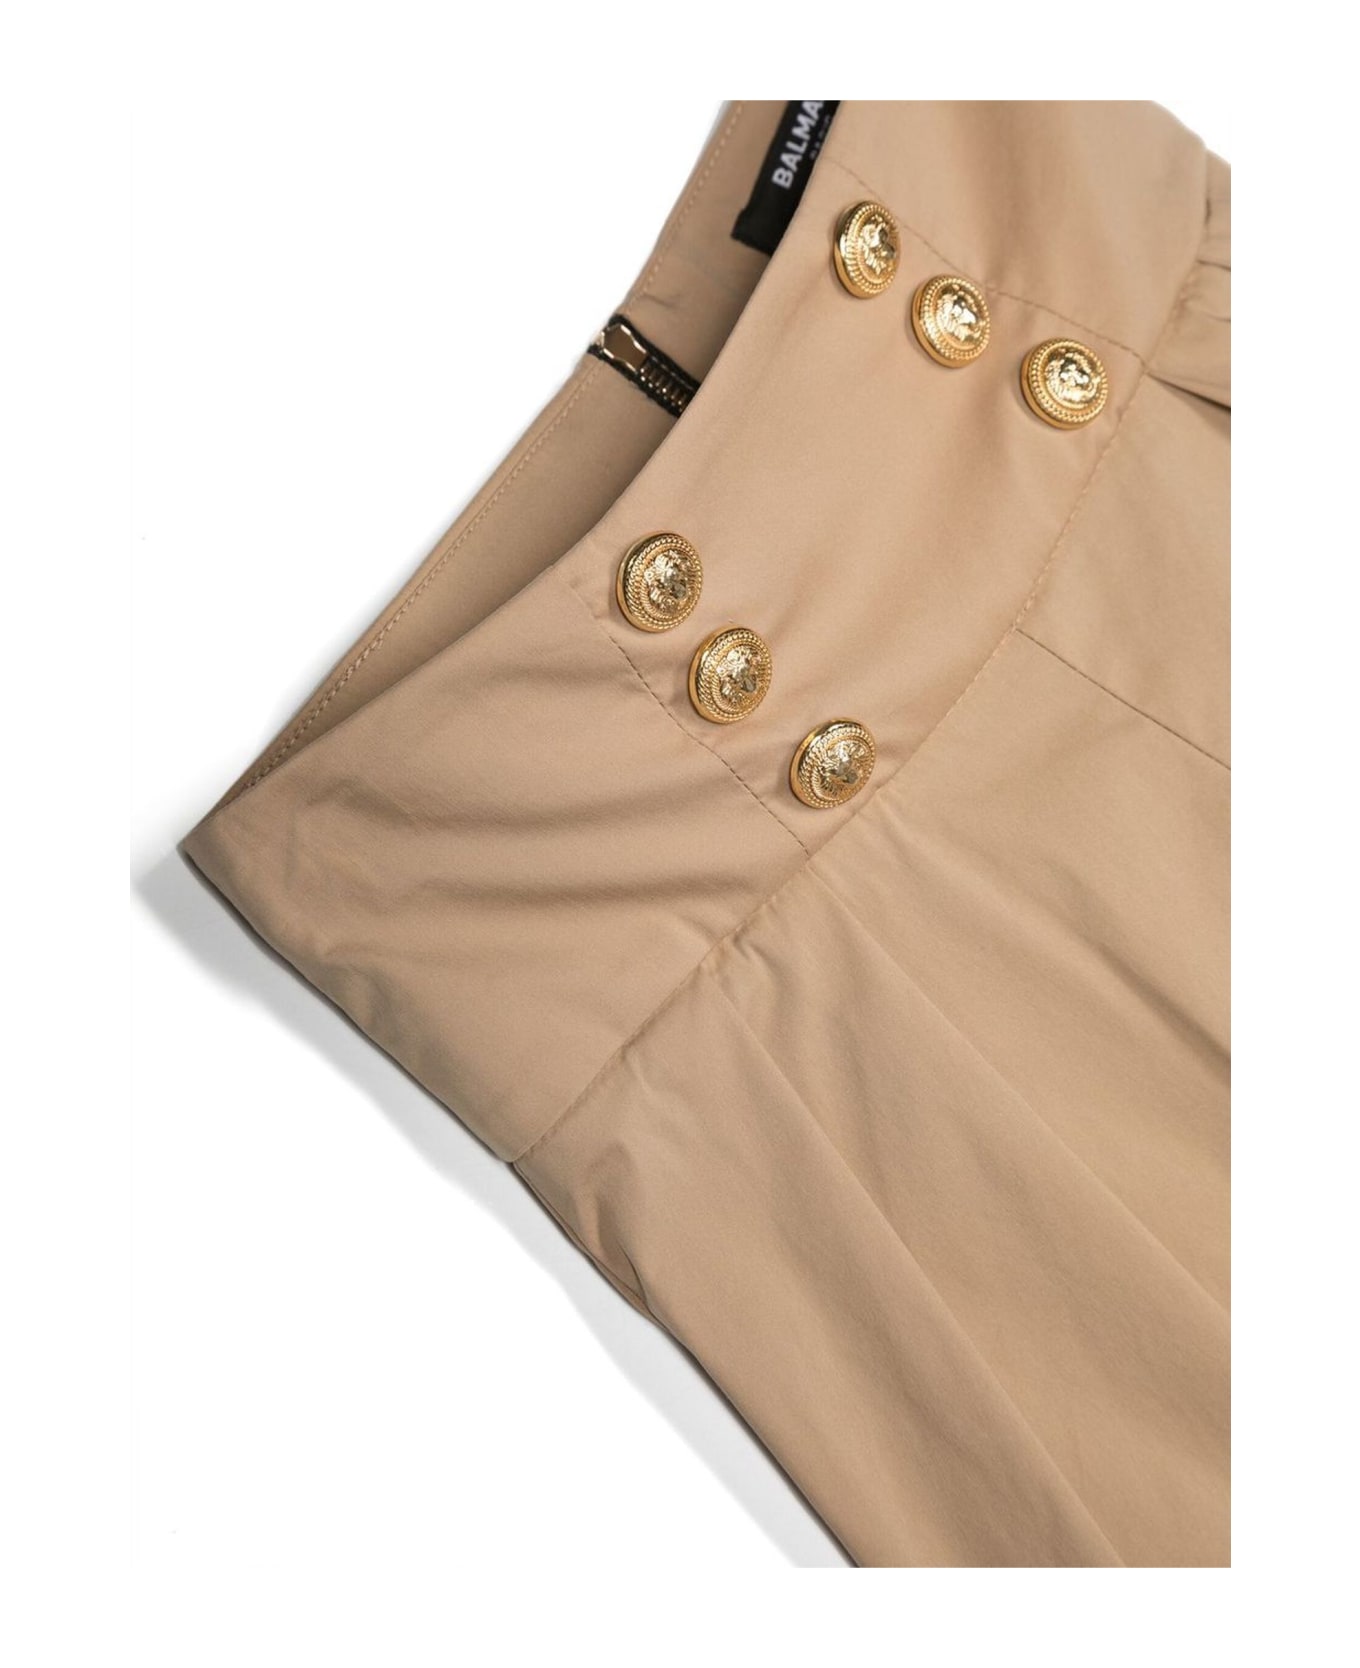 Balmain Brown Cotton Shorts - Beige